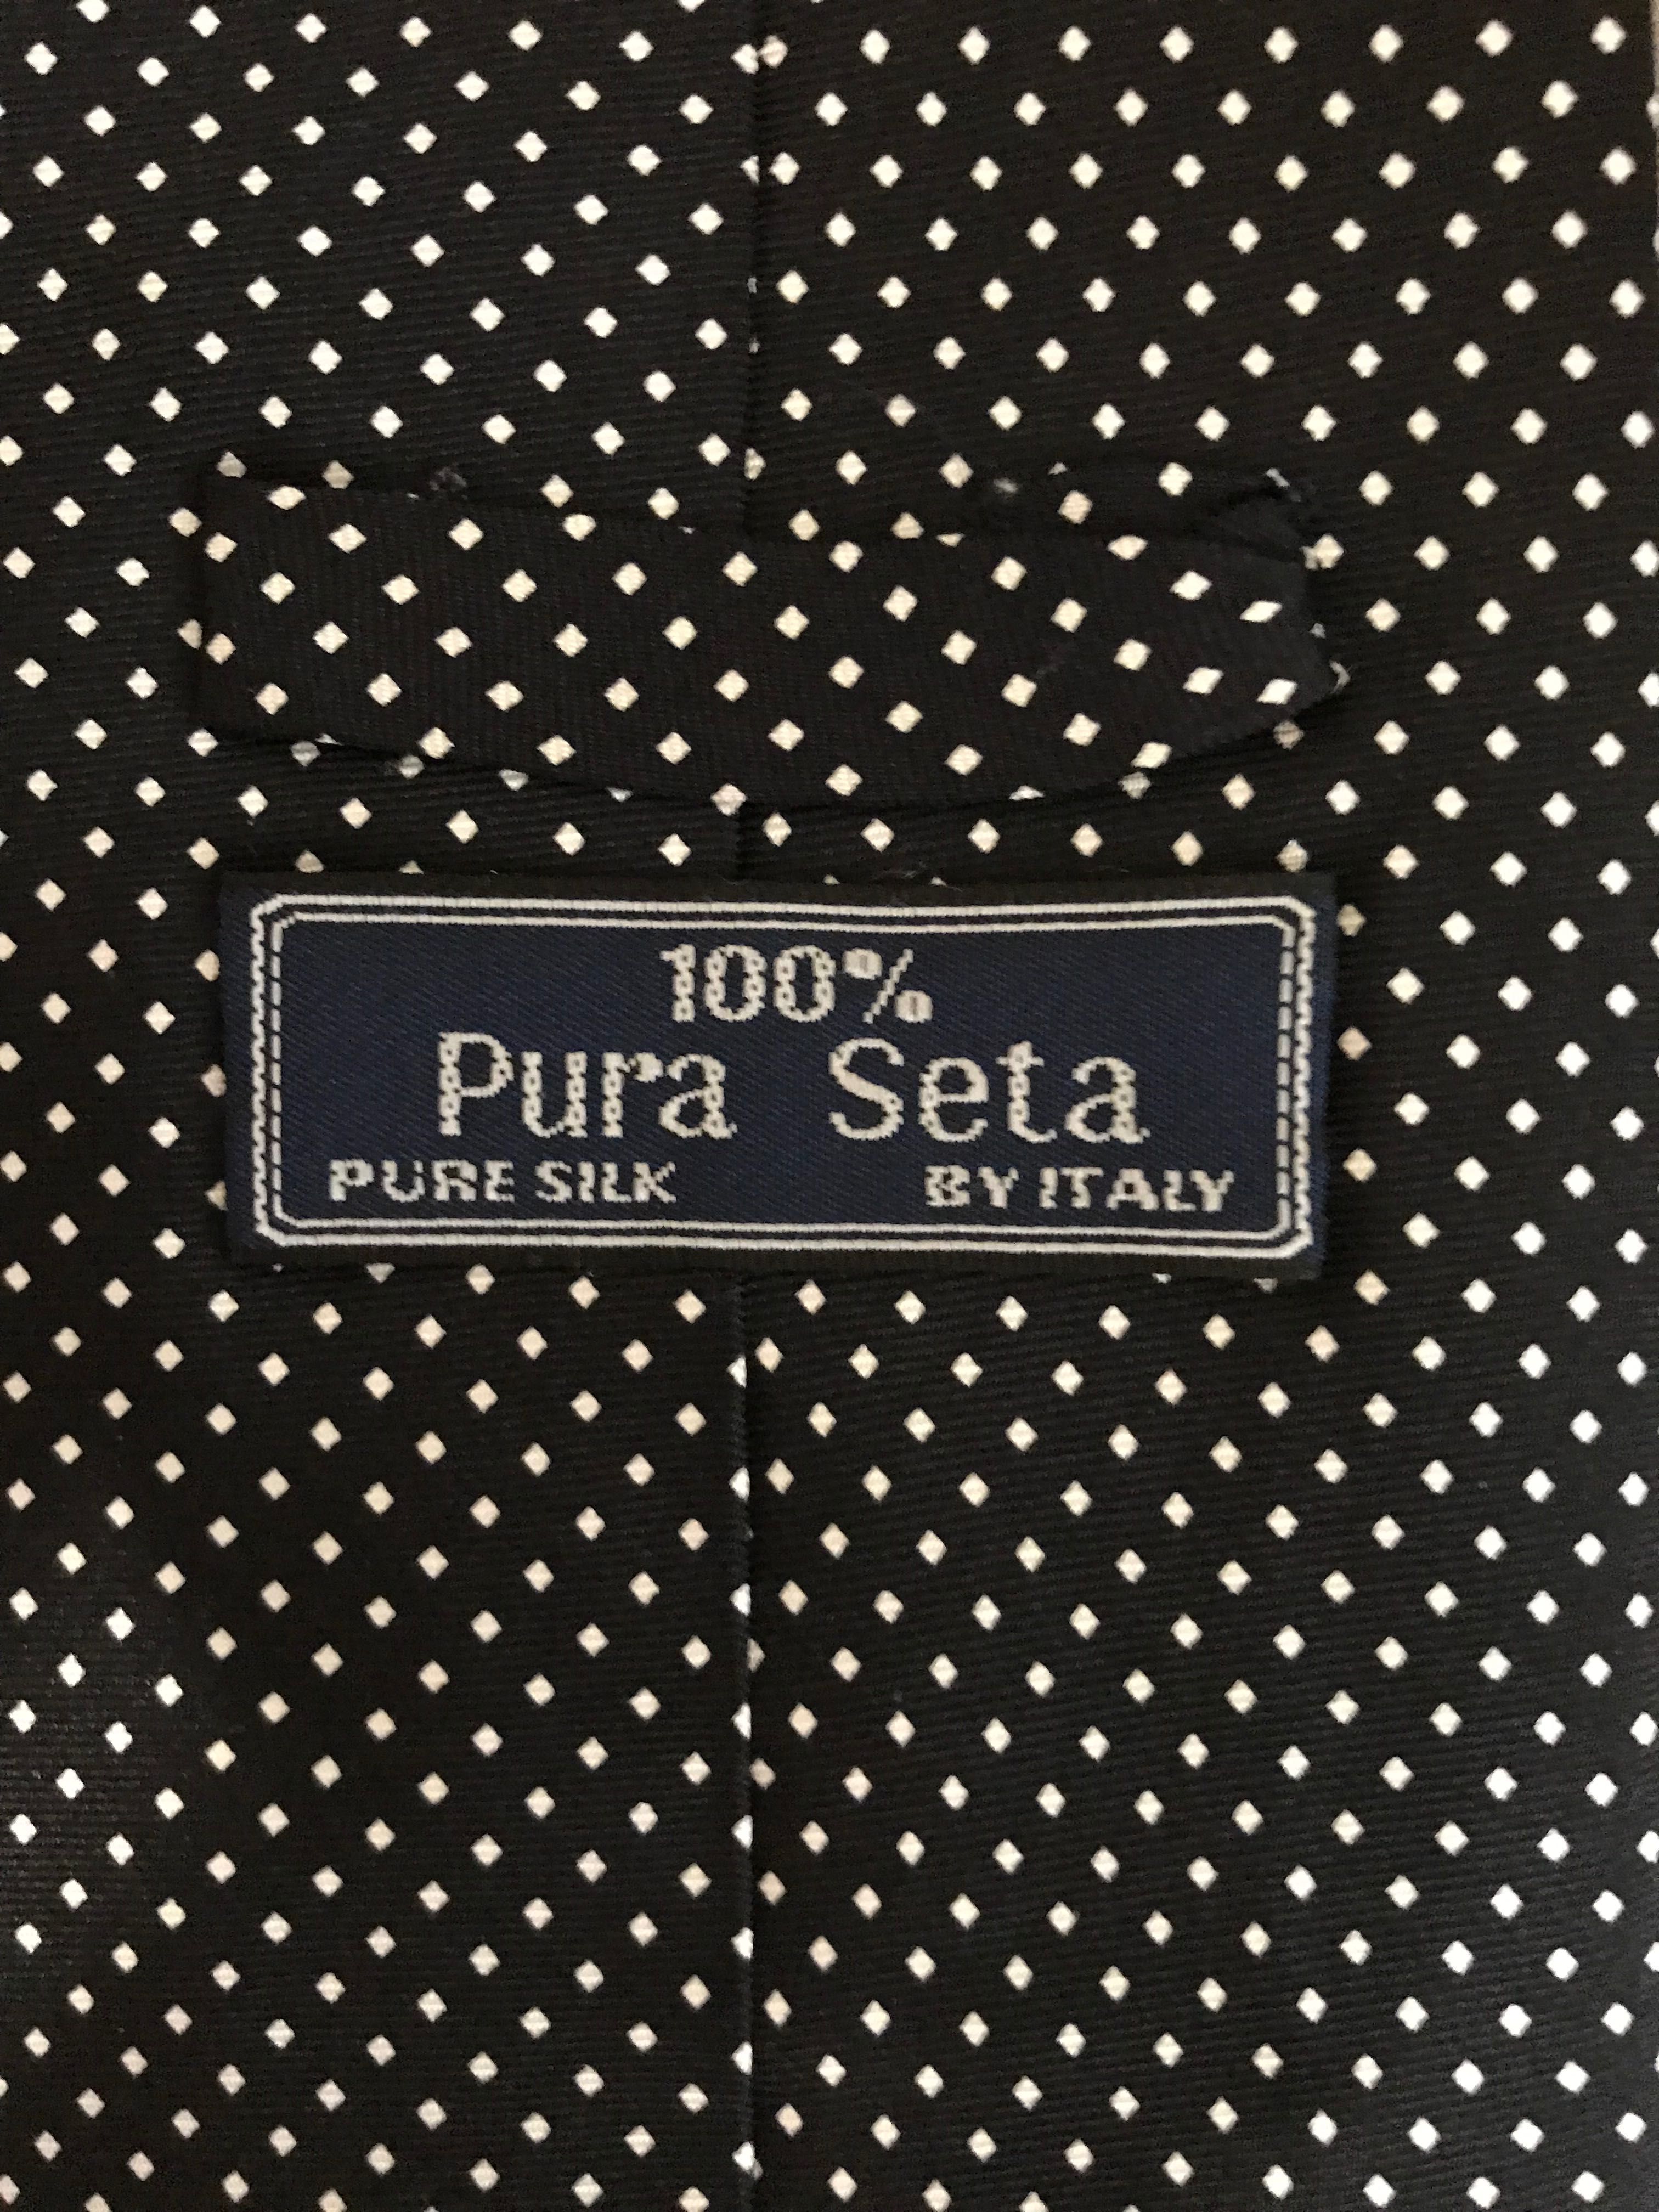 Італійські шовкові краватки (Hugo Boss, Pura Seta,Mannhaft)